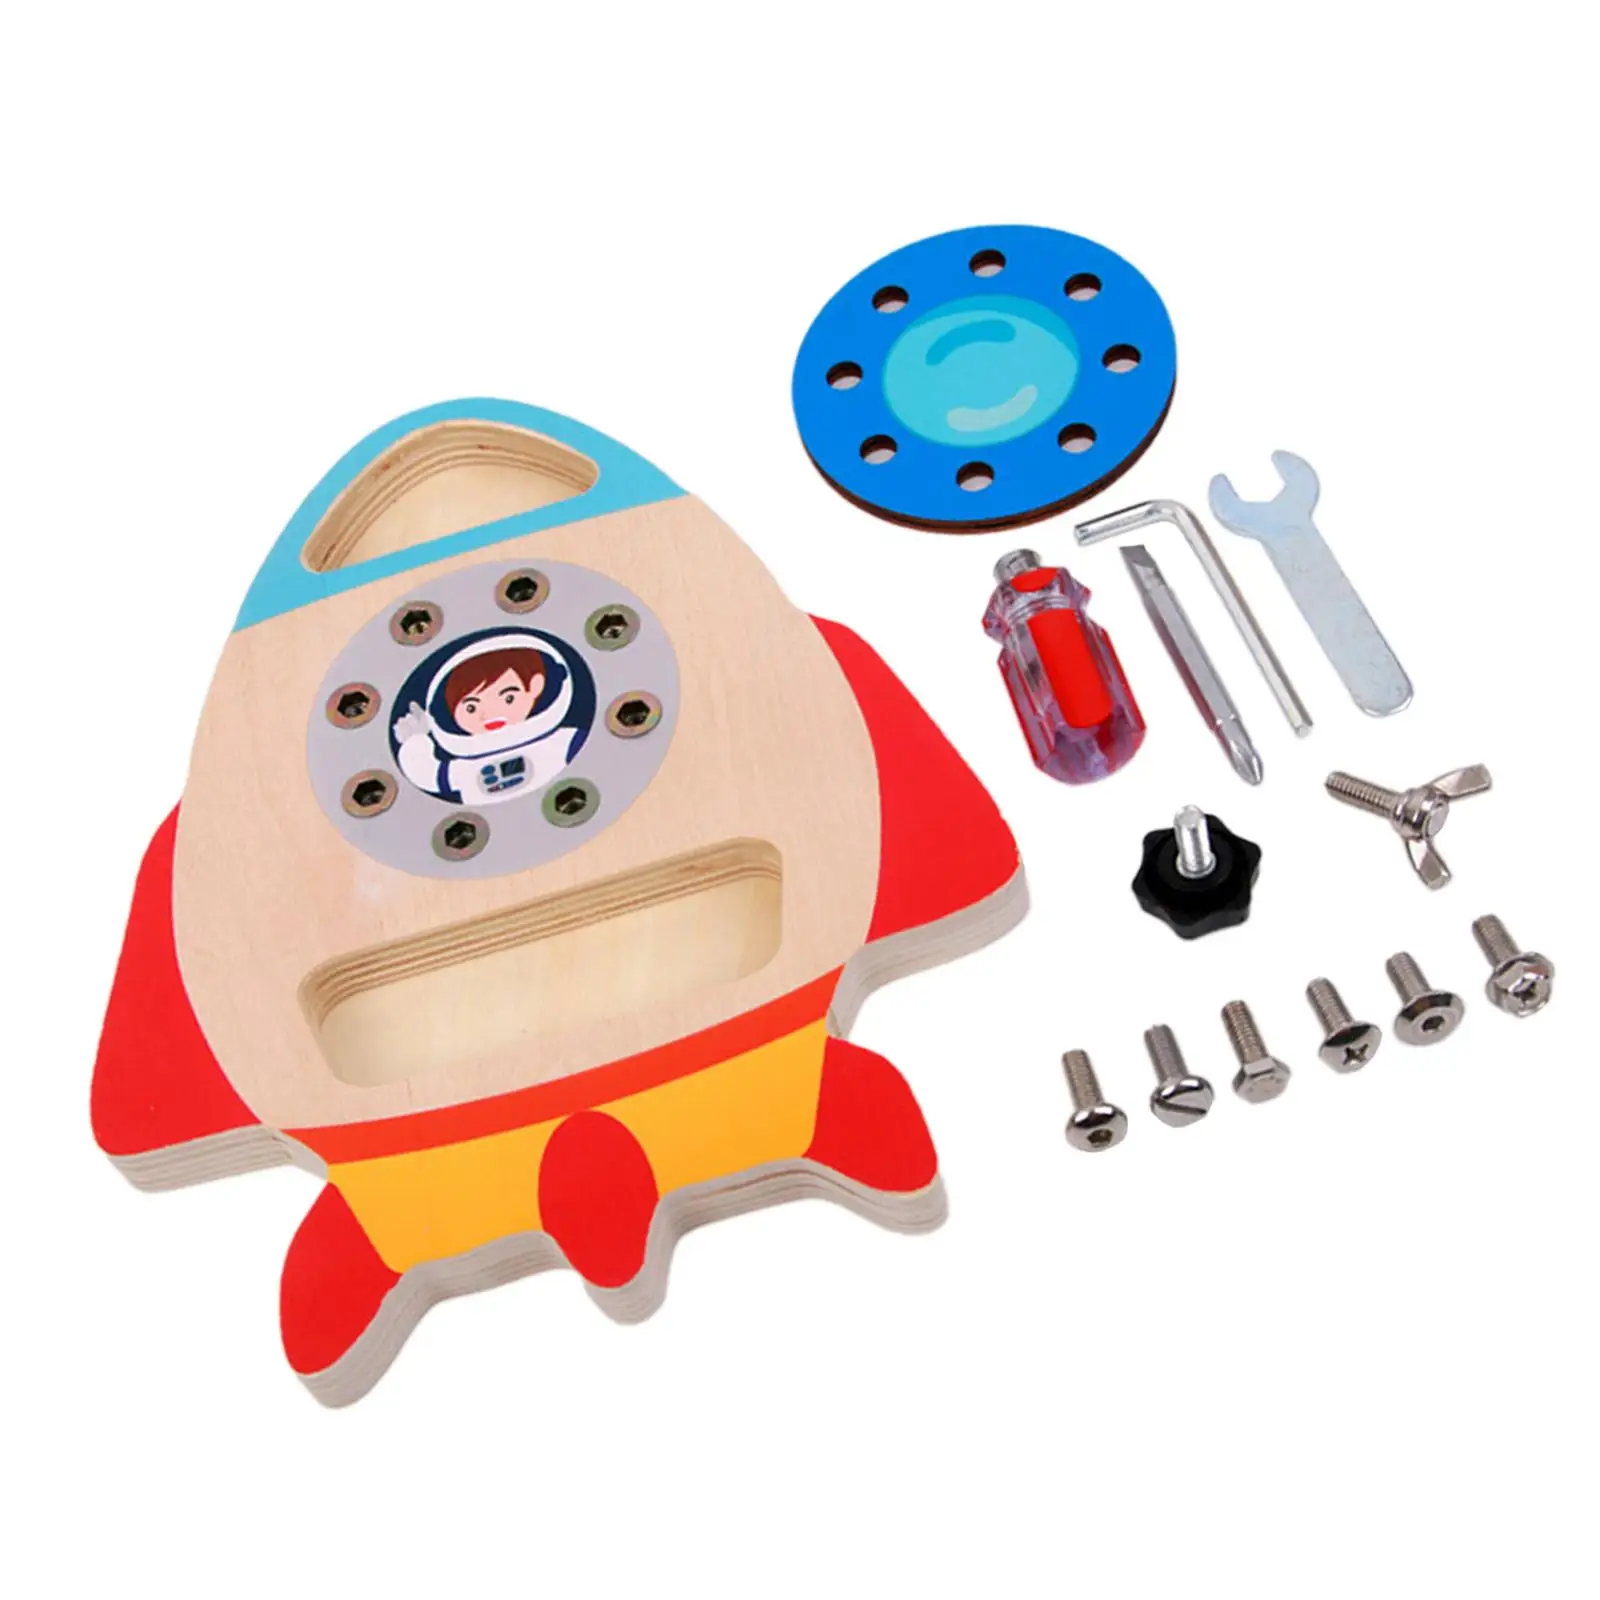 Montessori Screwdriver Board Set Toy Wooden Screwdriver Activities Tools for Boy Children Toddlers